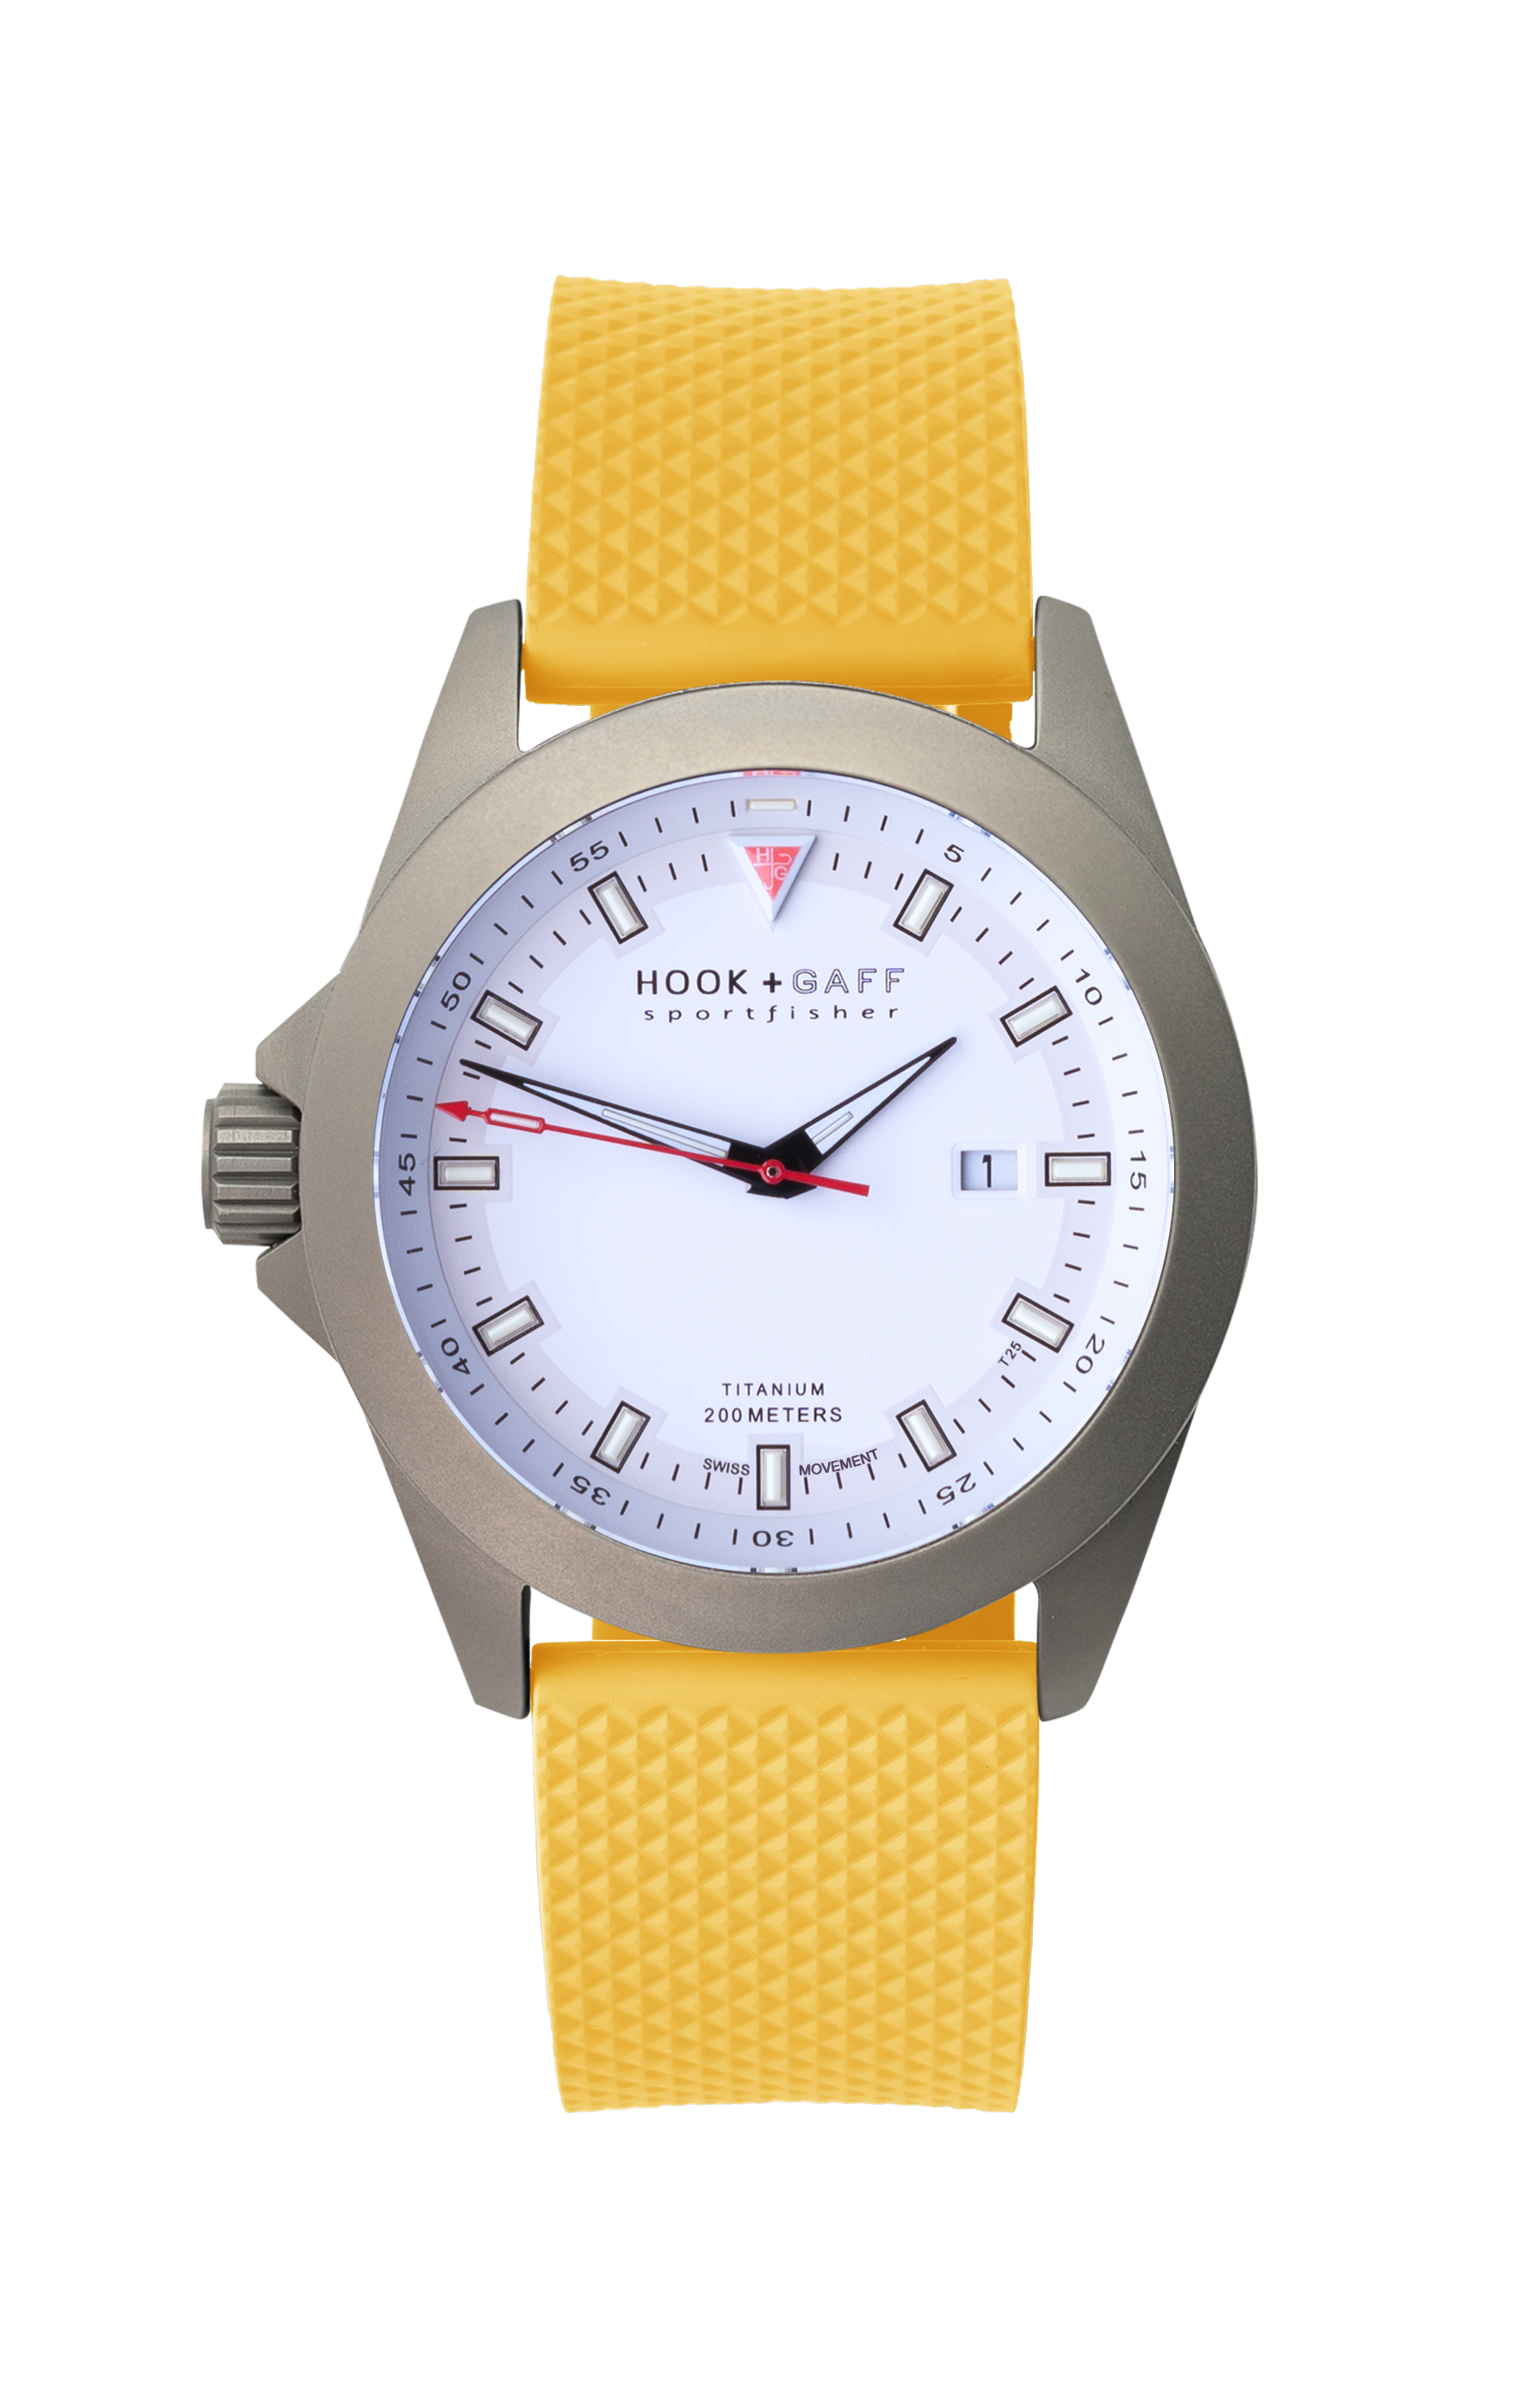 Hook + Gaff Watch Company - Versatile, durable, functionalmade